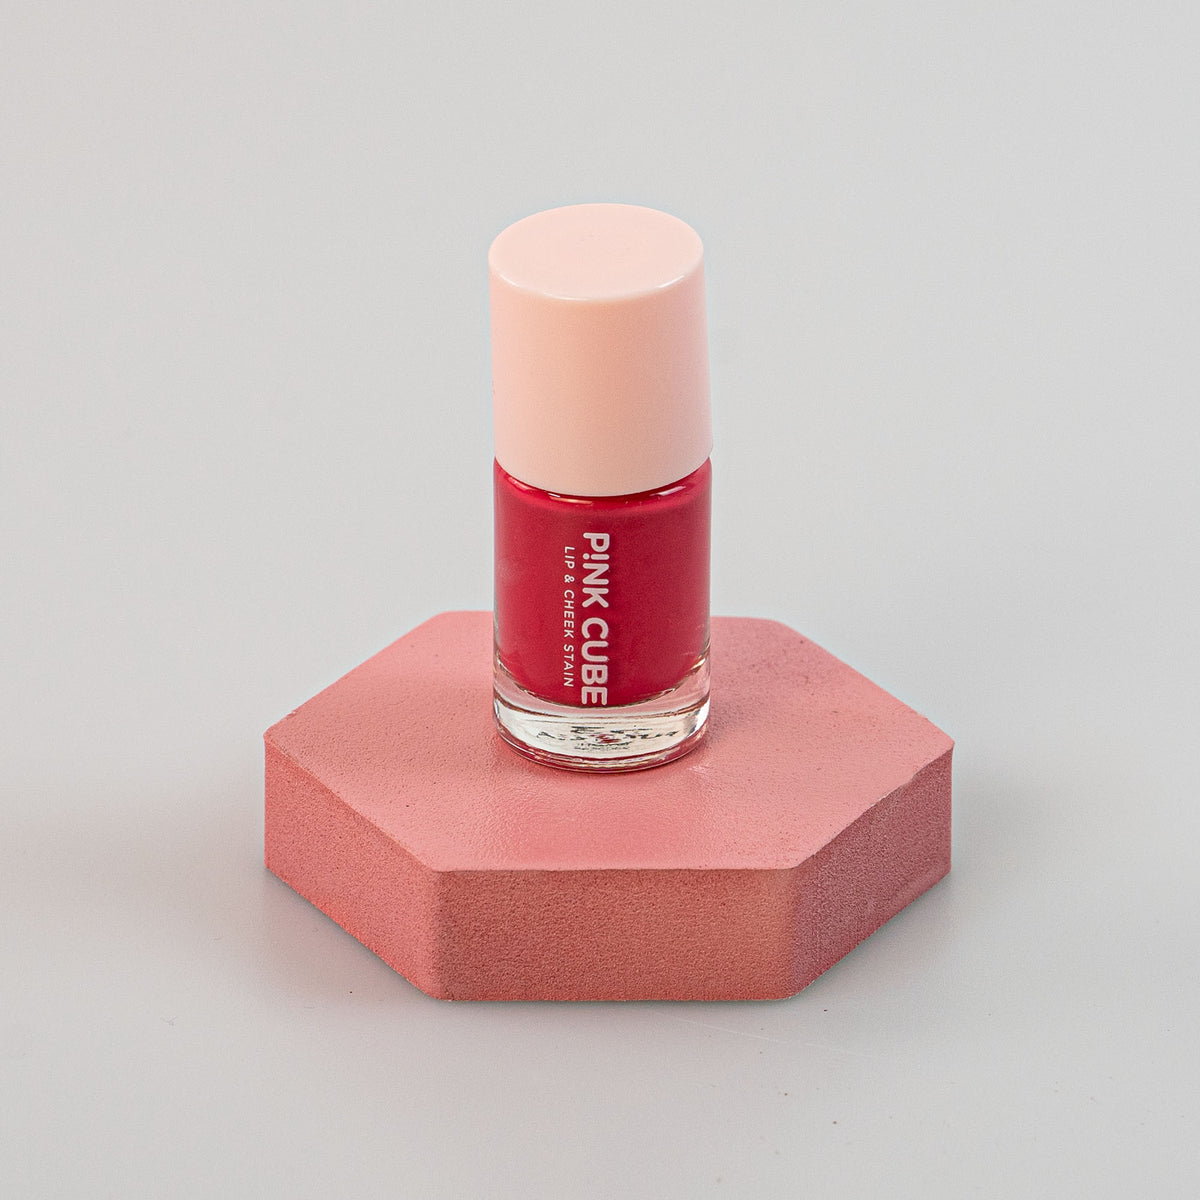 Lip and Cheek Stain rossetto liquido labbra e guance Make Up Miniso Beauty Pink Cube